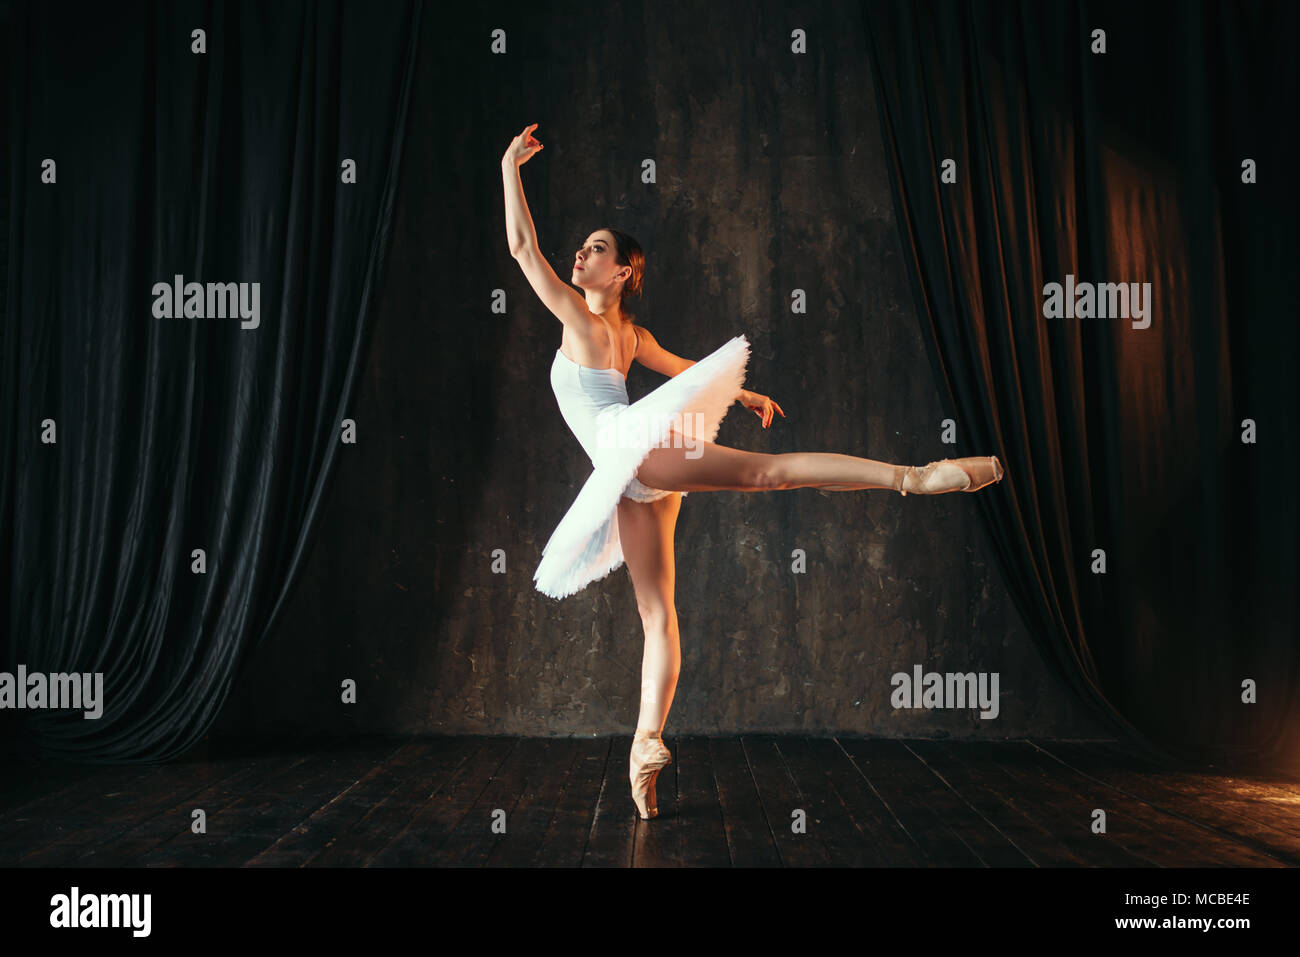 Ballerina in white dress dancing in ballet class Stock Photo